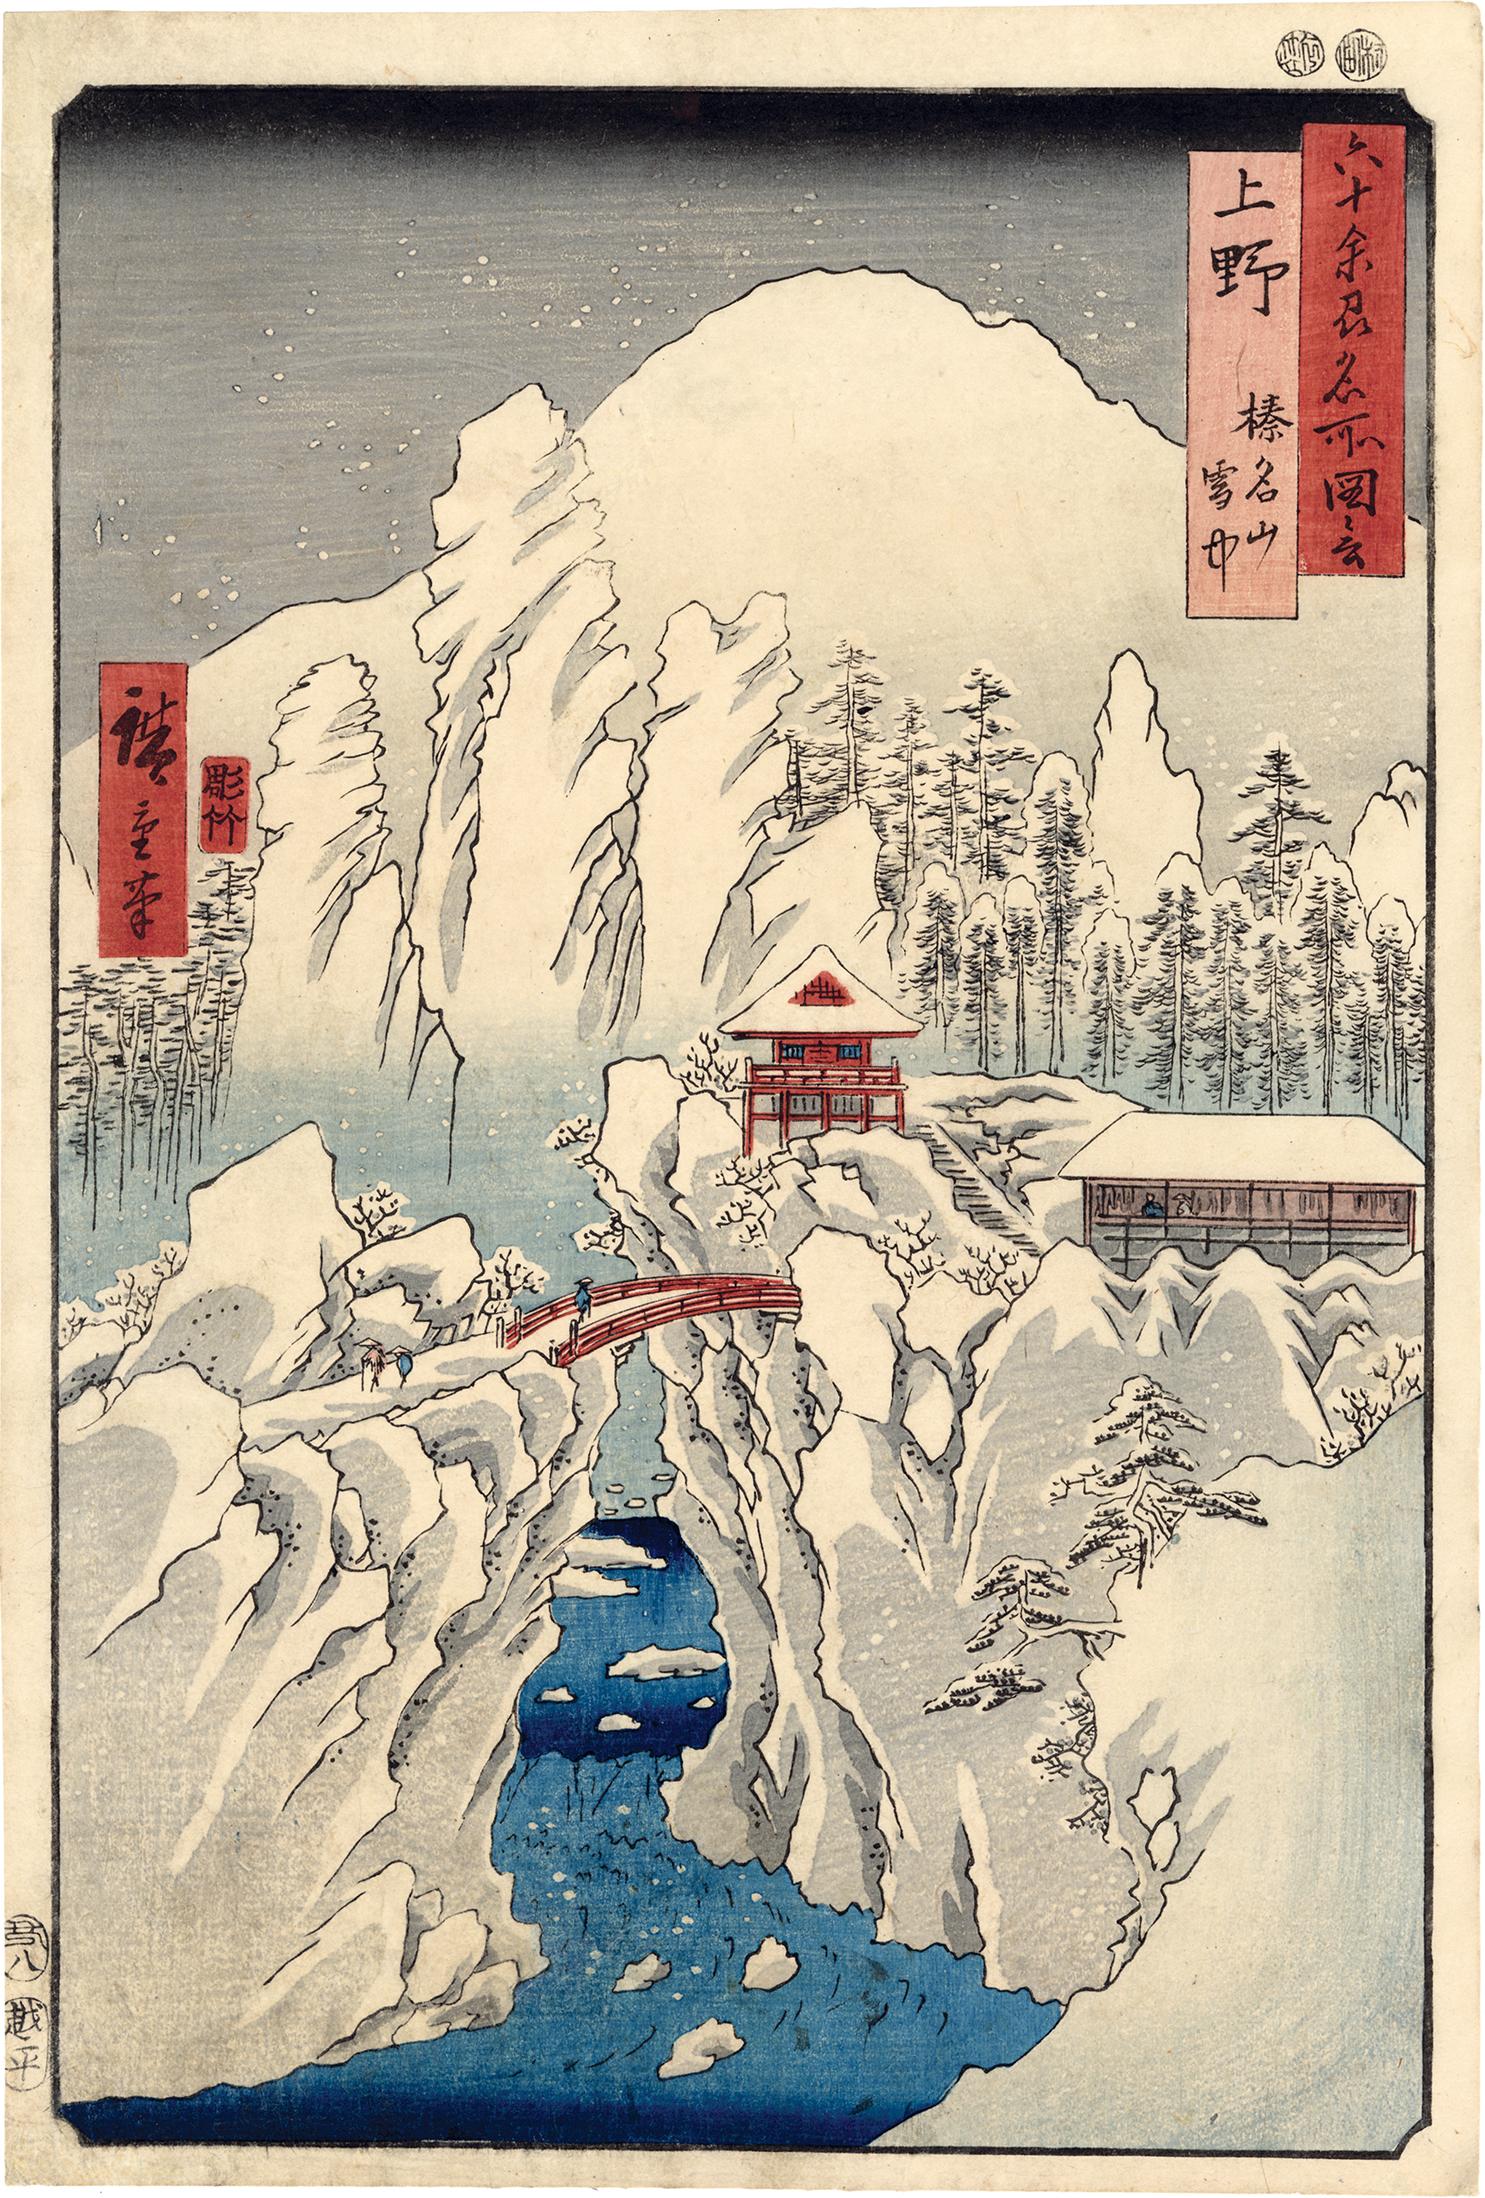 Utagawa Hiroshige (Ando Hiroshige) Landscape Print - Kozuke Province, Mount Haruna Under Snow